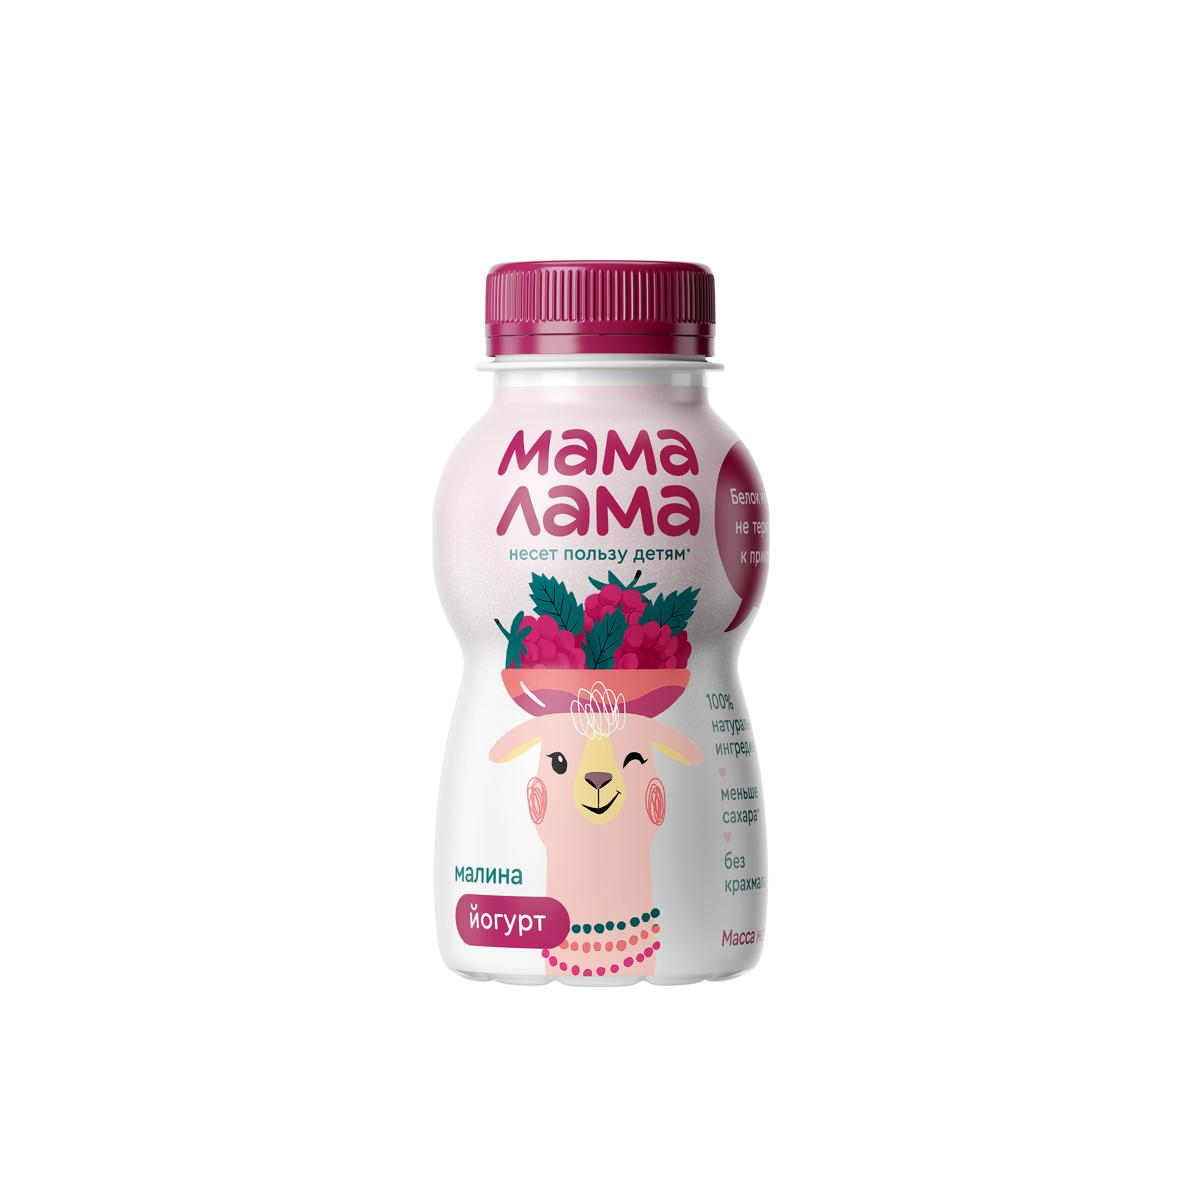 Картинка лама мама. Йогурт мама лама 2,5% с персик200г. Йогурт питьевой мама лама 2,5% малина 200г. Йогурт мама лама упаковка 6 шт. Йогурт питьевой мама лама персик 2,5% 200 г БЗМЖ..